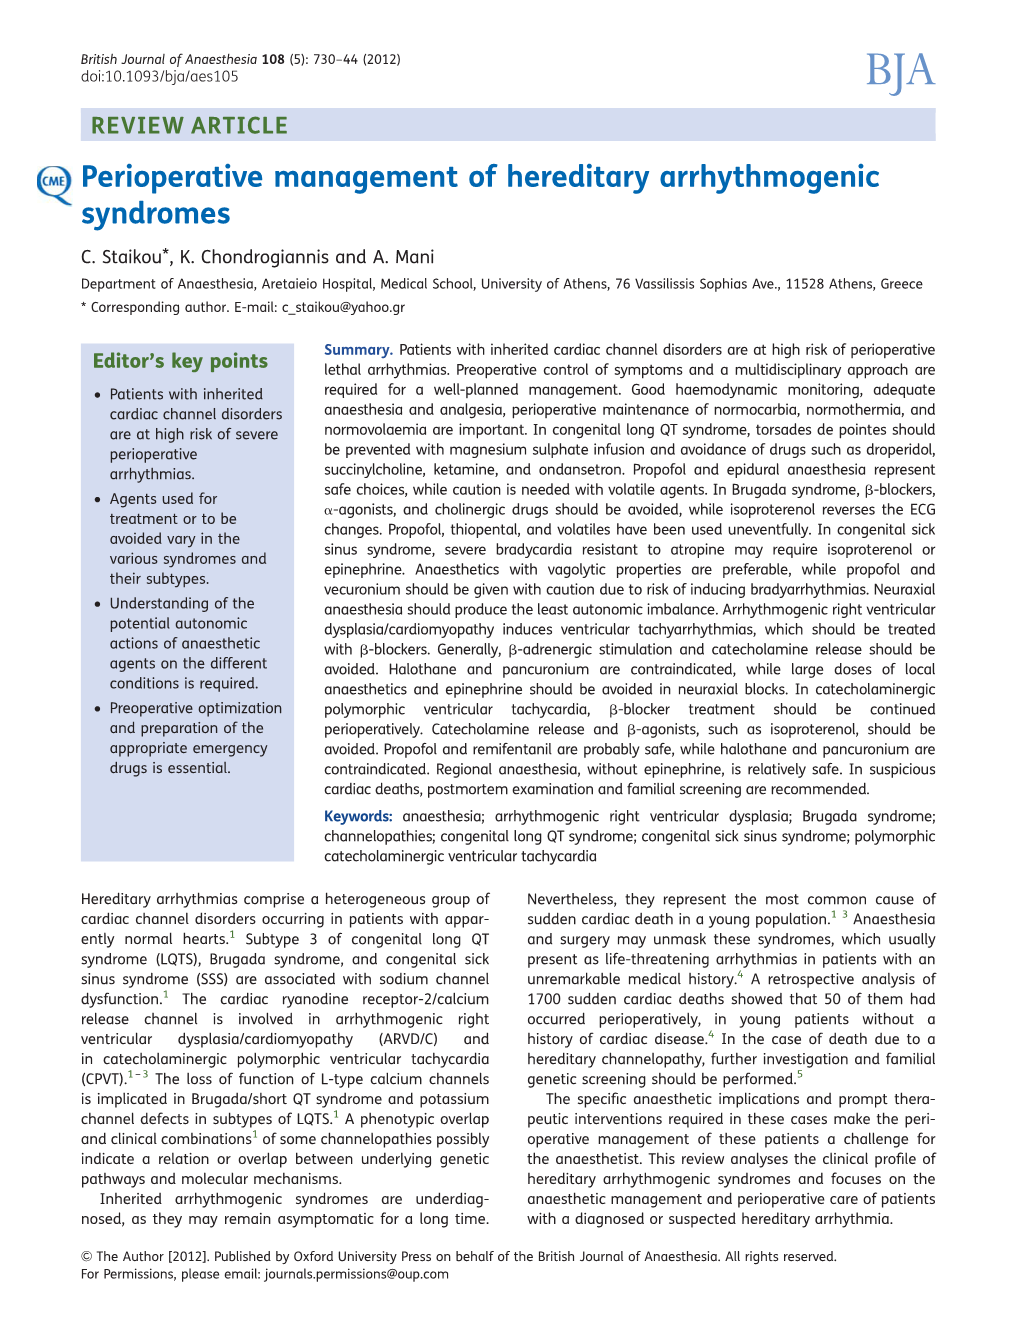 Perioperative Management of Hereditary Arrhythmogenic Syndromes